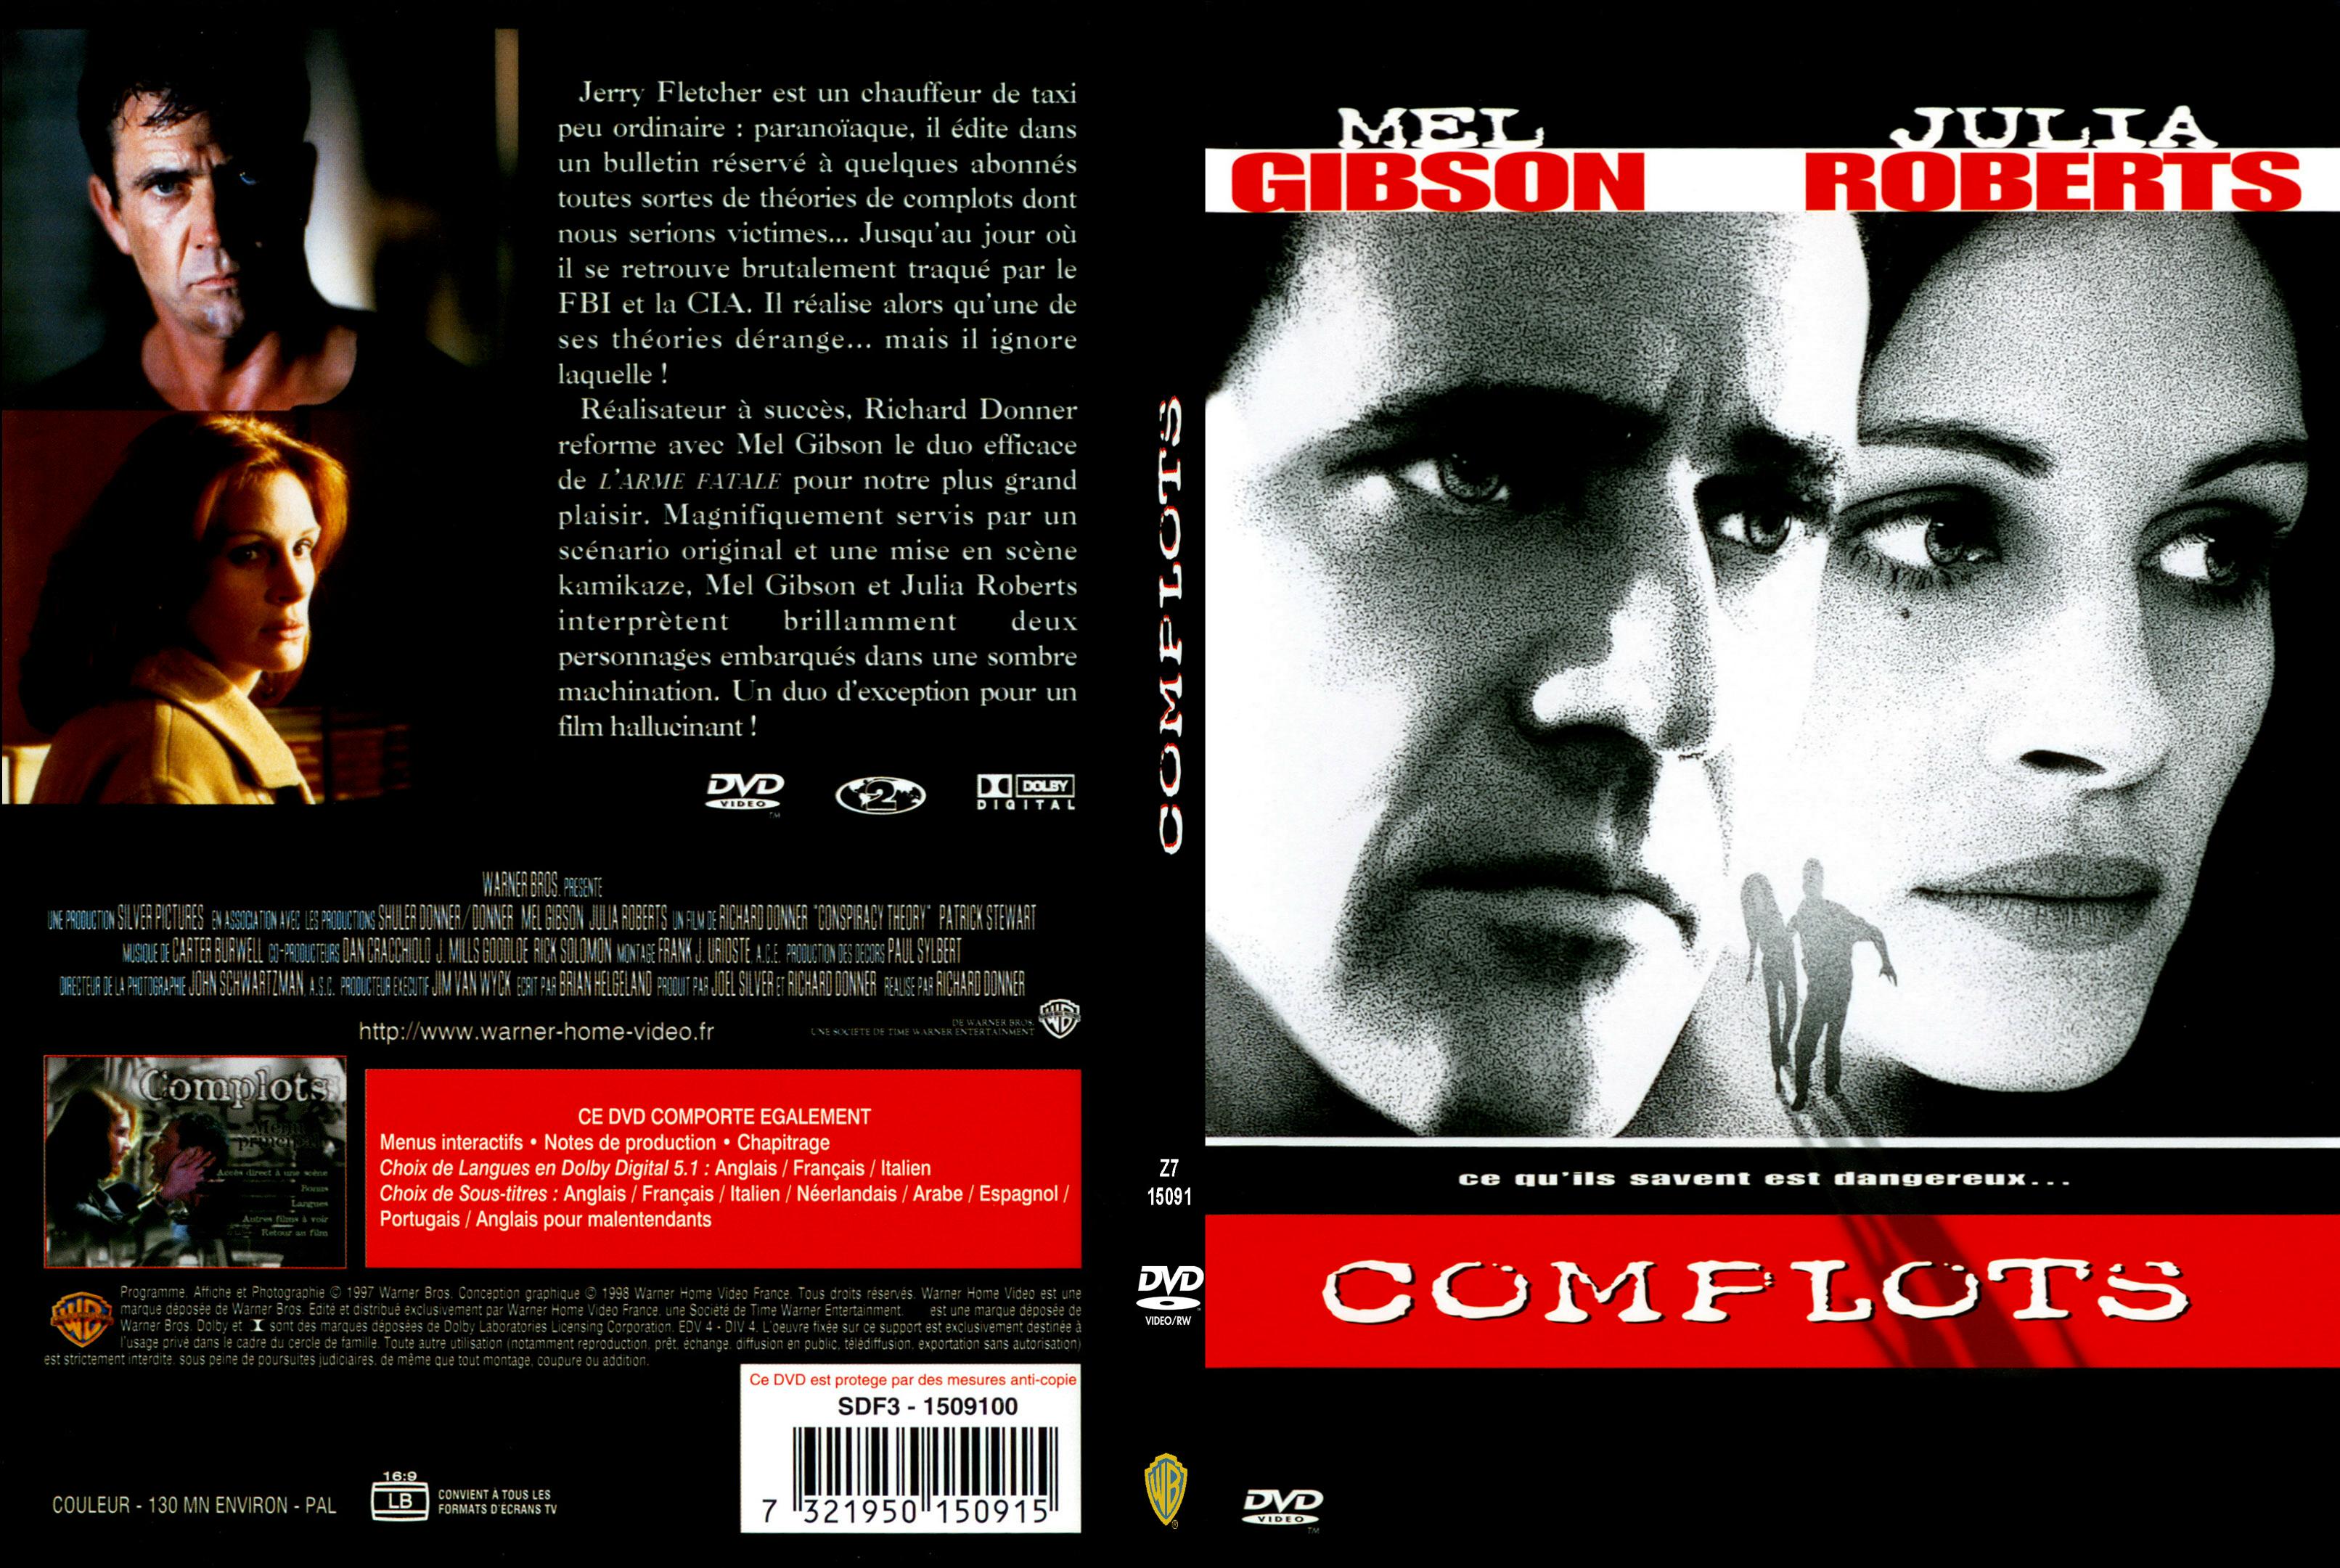 Jaquette DVD Complots - SLIM